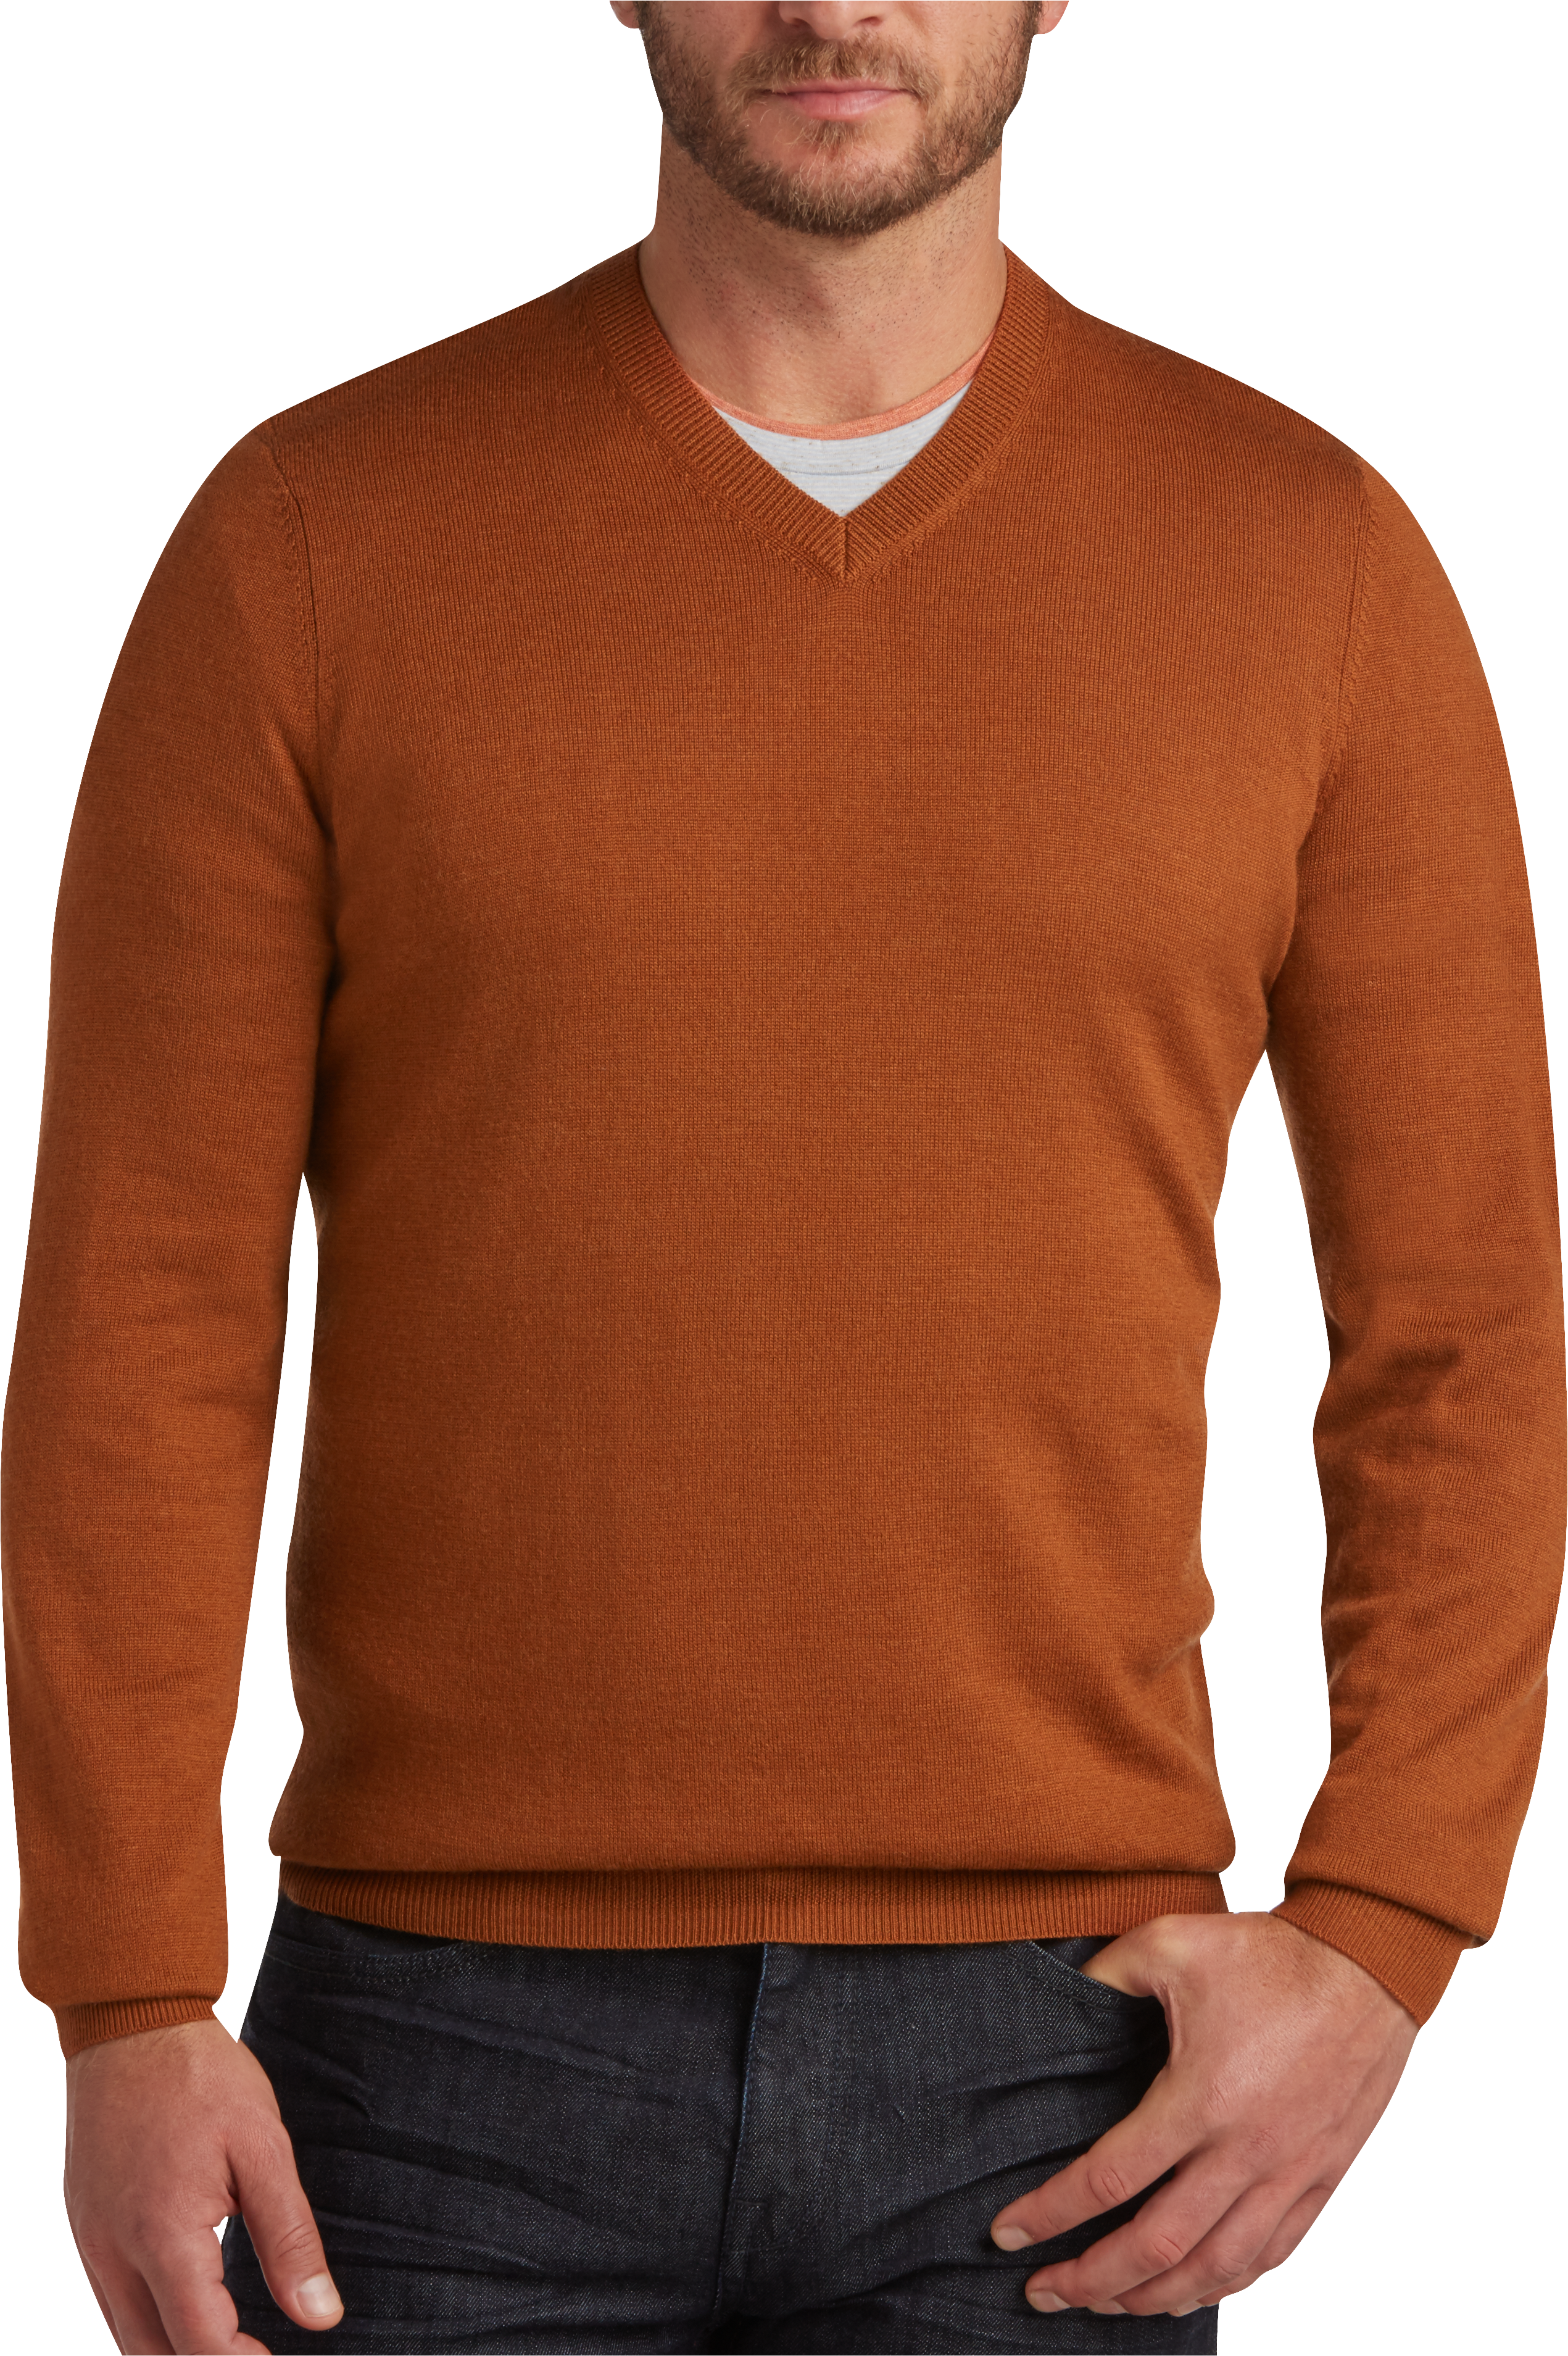 Joseph Abboud Orange V-Neck Merino Wool Sweater - Men's Sweaters | Men ...